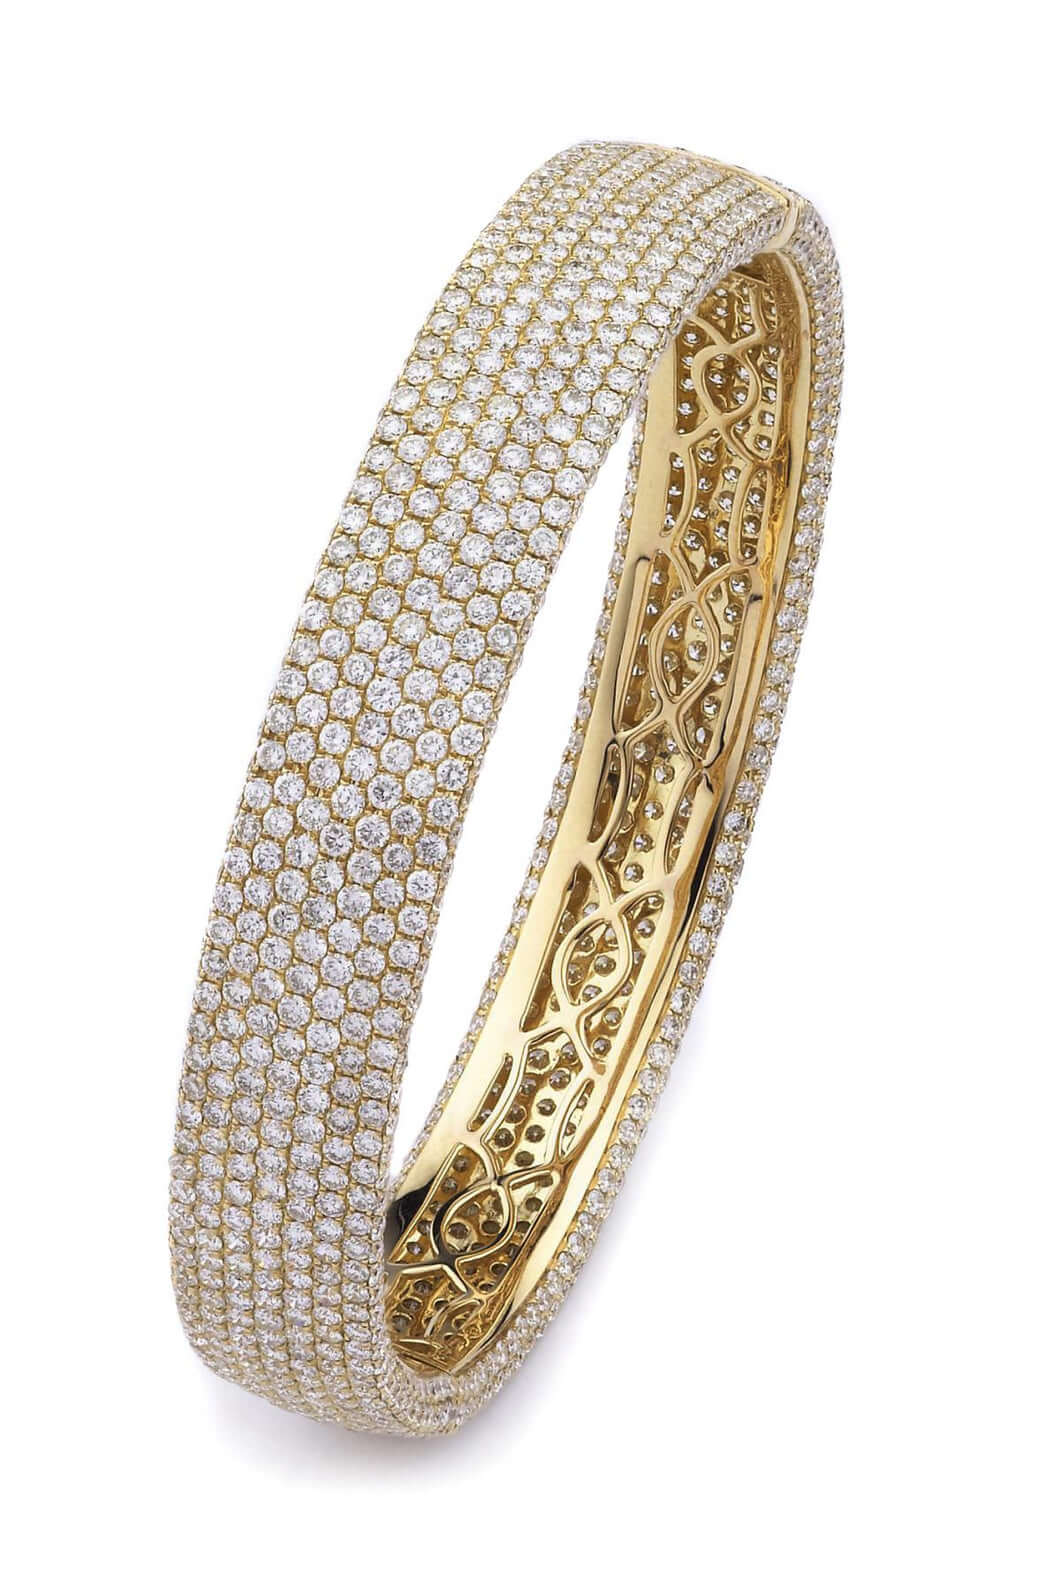 18K Yellow Gold Round Brilliant Cut Diamond Bangle Bracelet